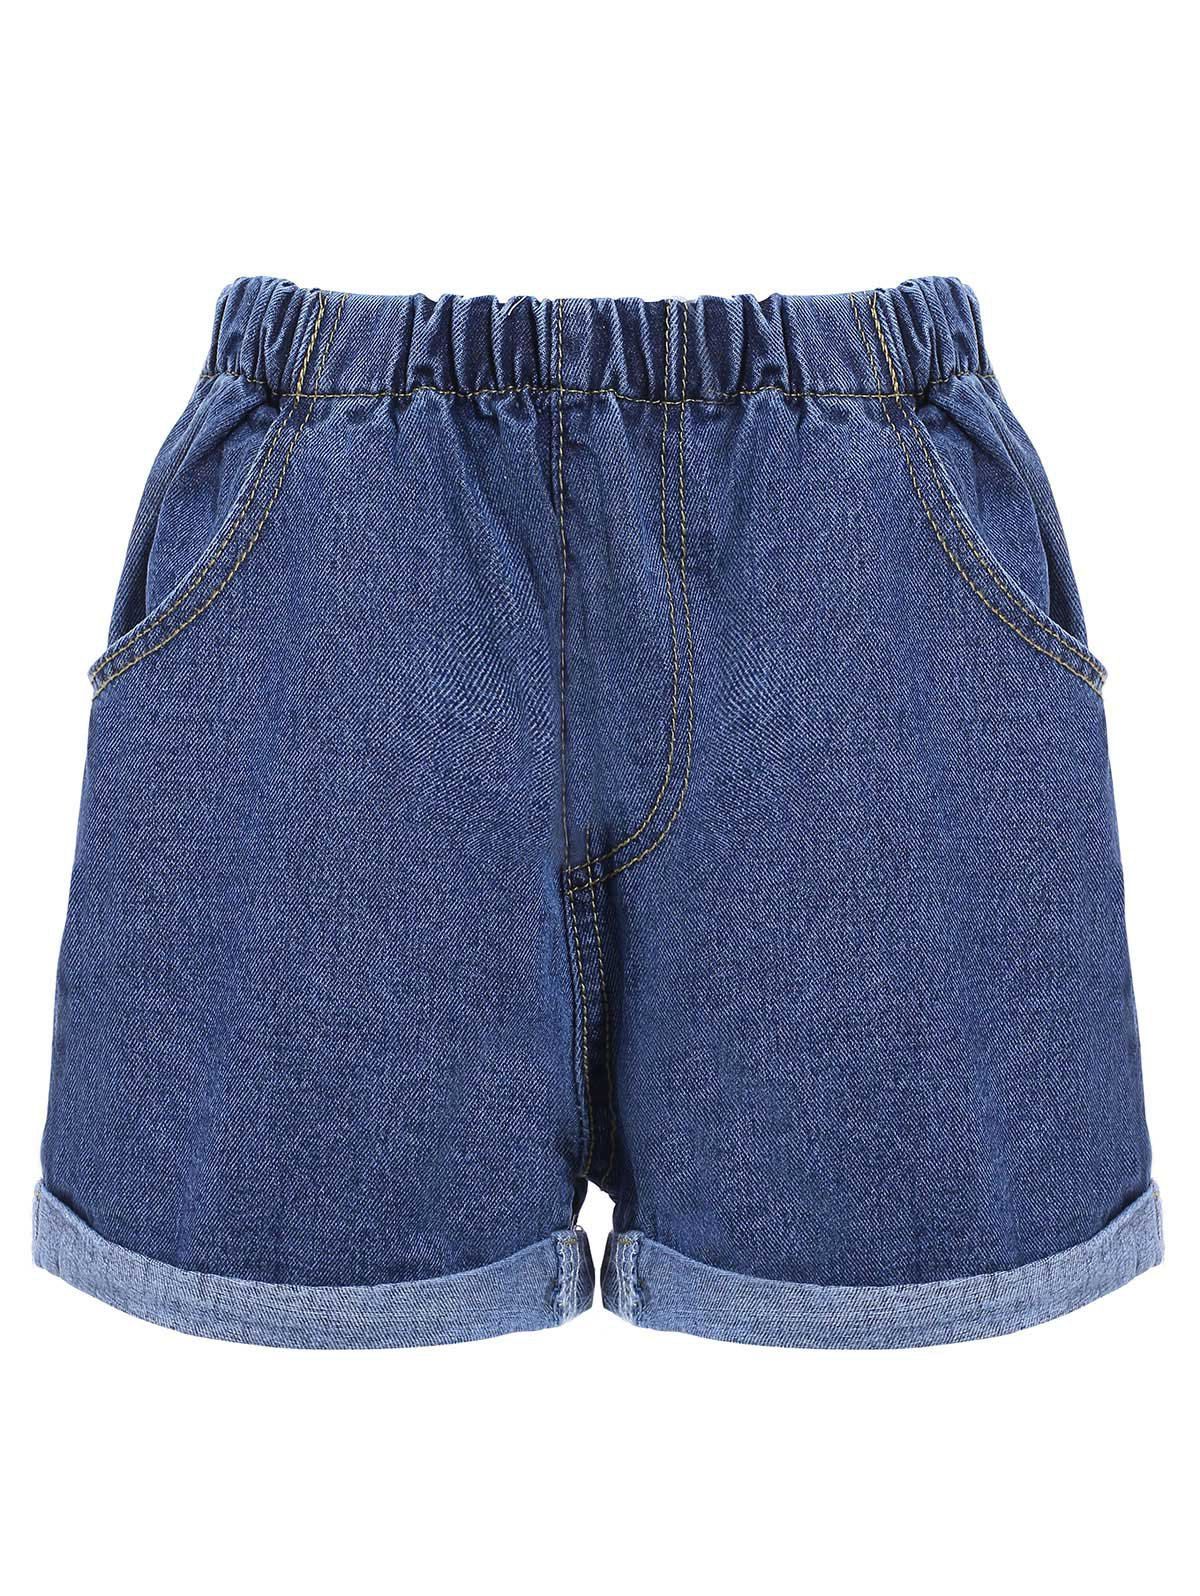 [17% OFF] 2021 Chic Elastic Waist Pocket Design Hemming Women's Shorts ...